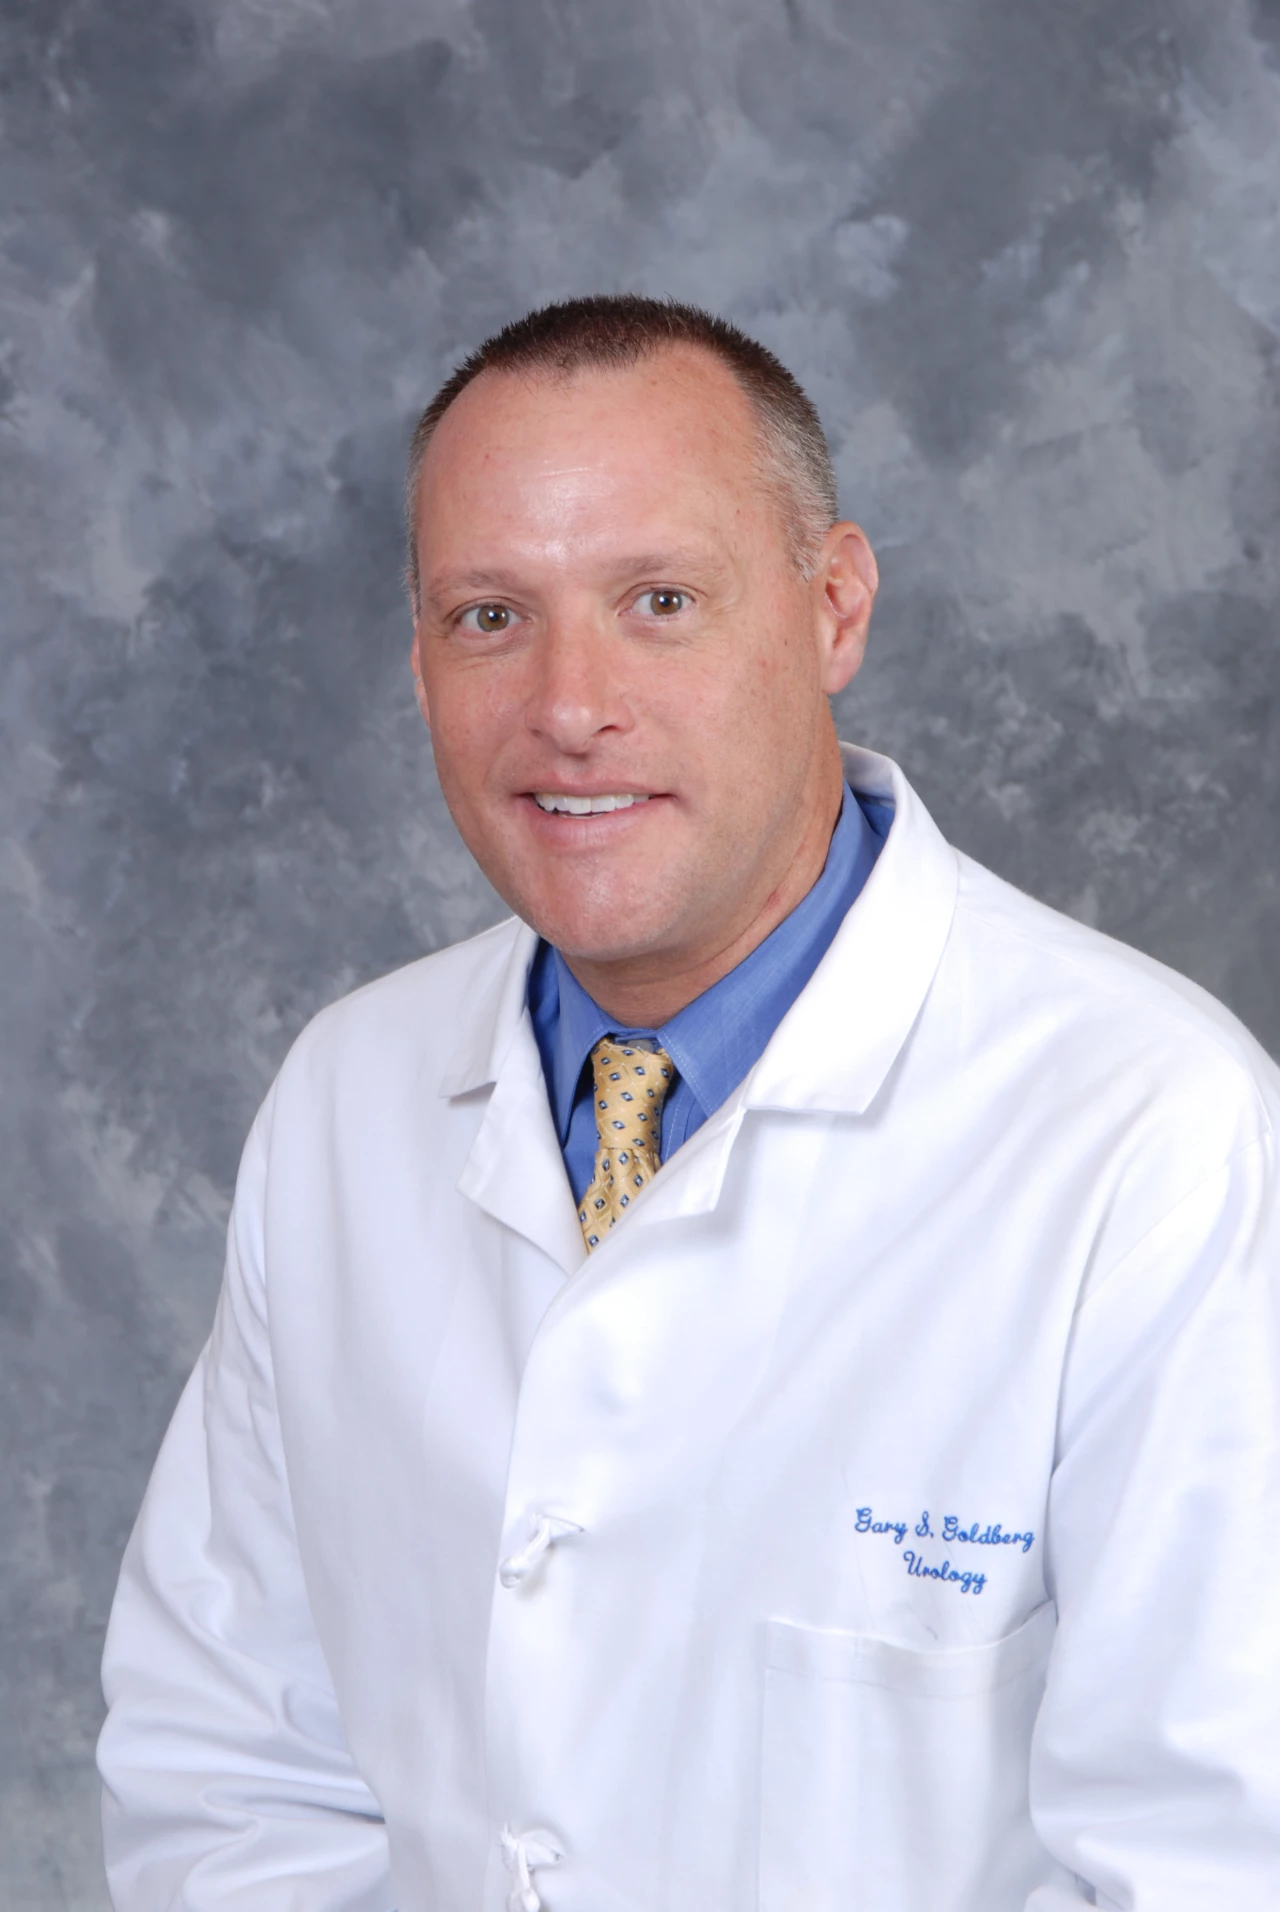 Gary Goldberg - Urology doctor at Wickersham Health Campus